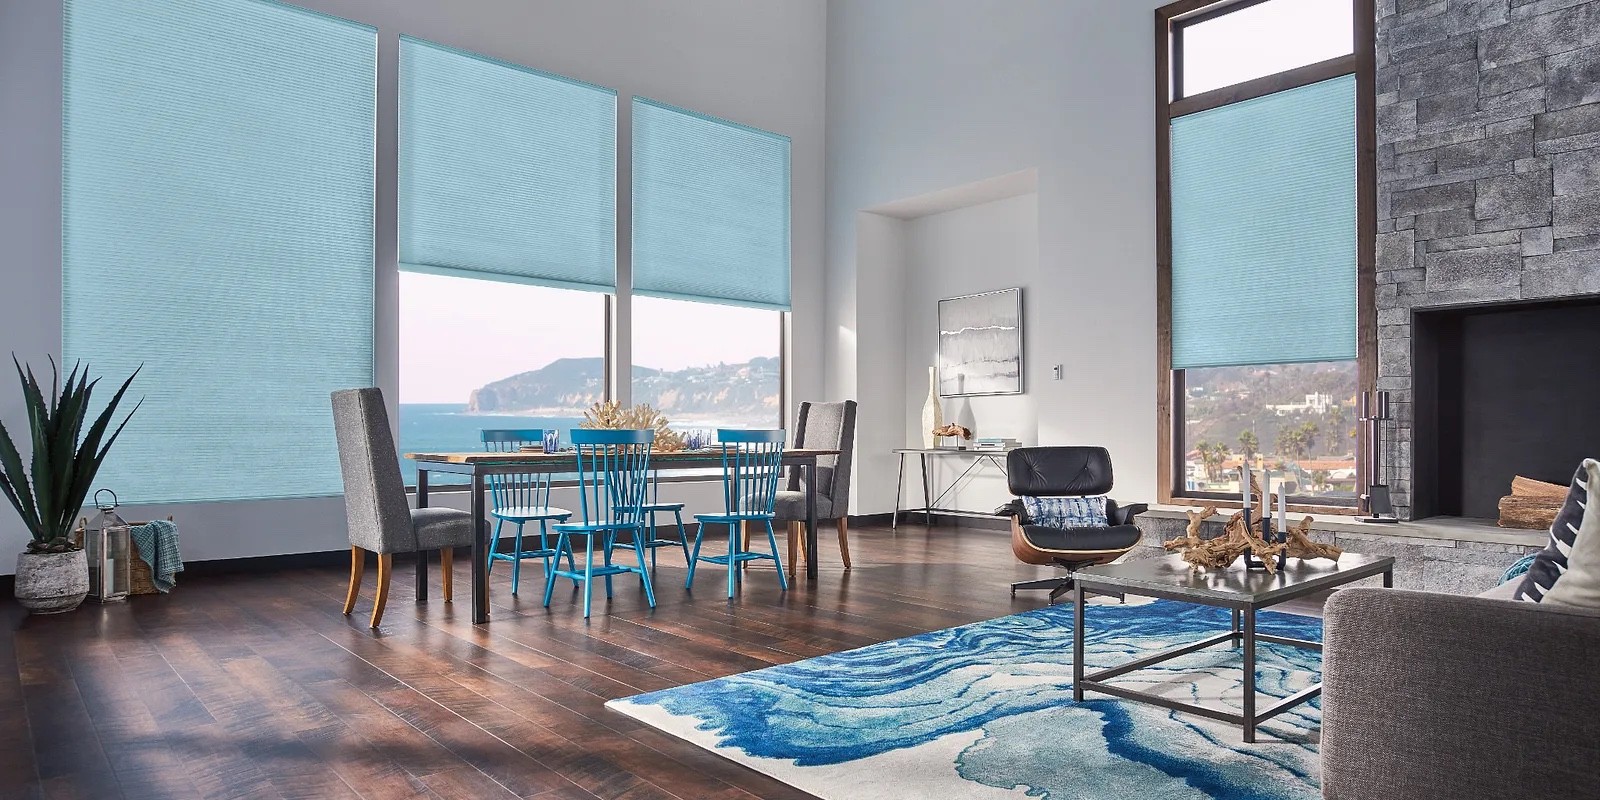 Window treatments shades | Panter's Hardwood Floors & More